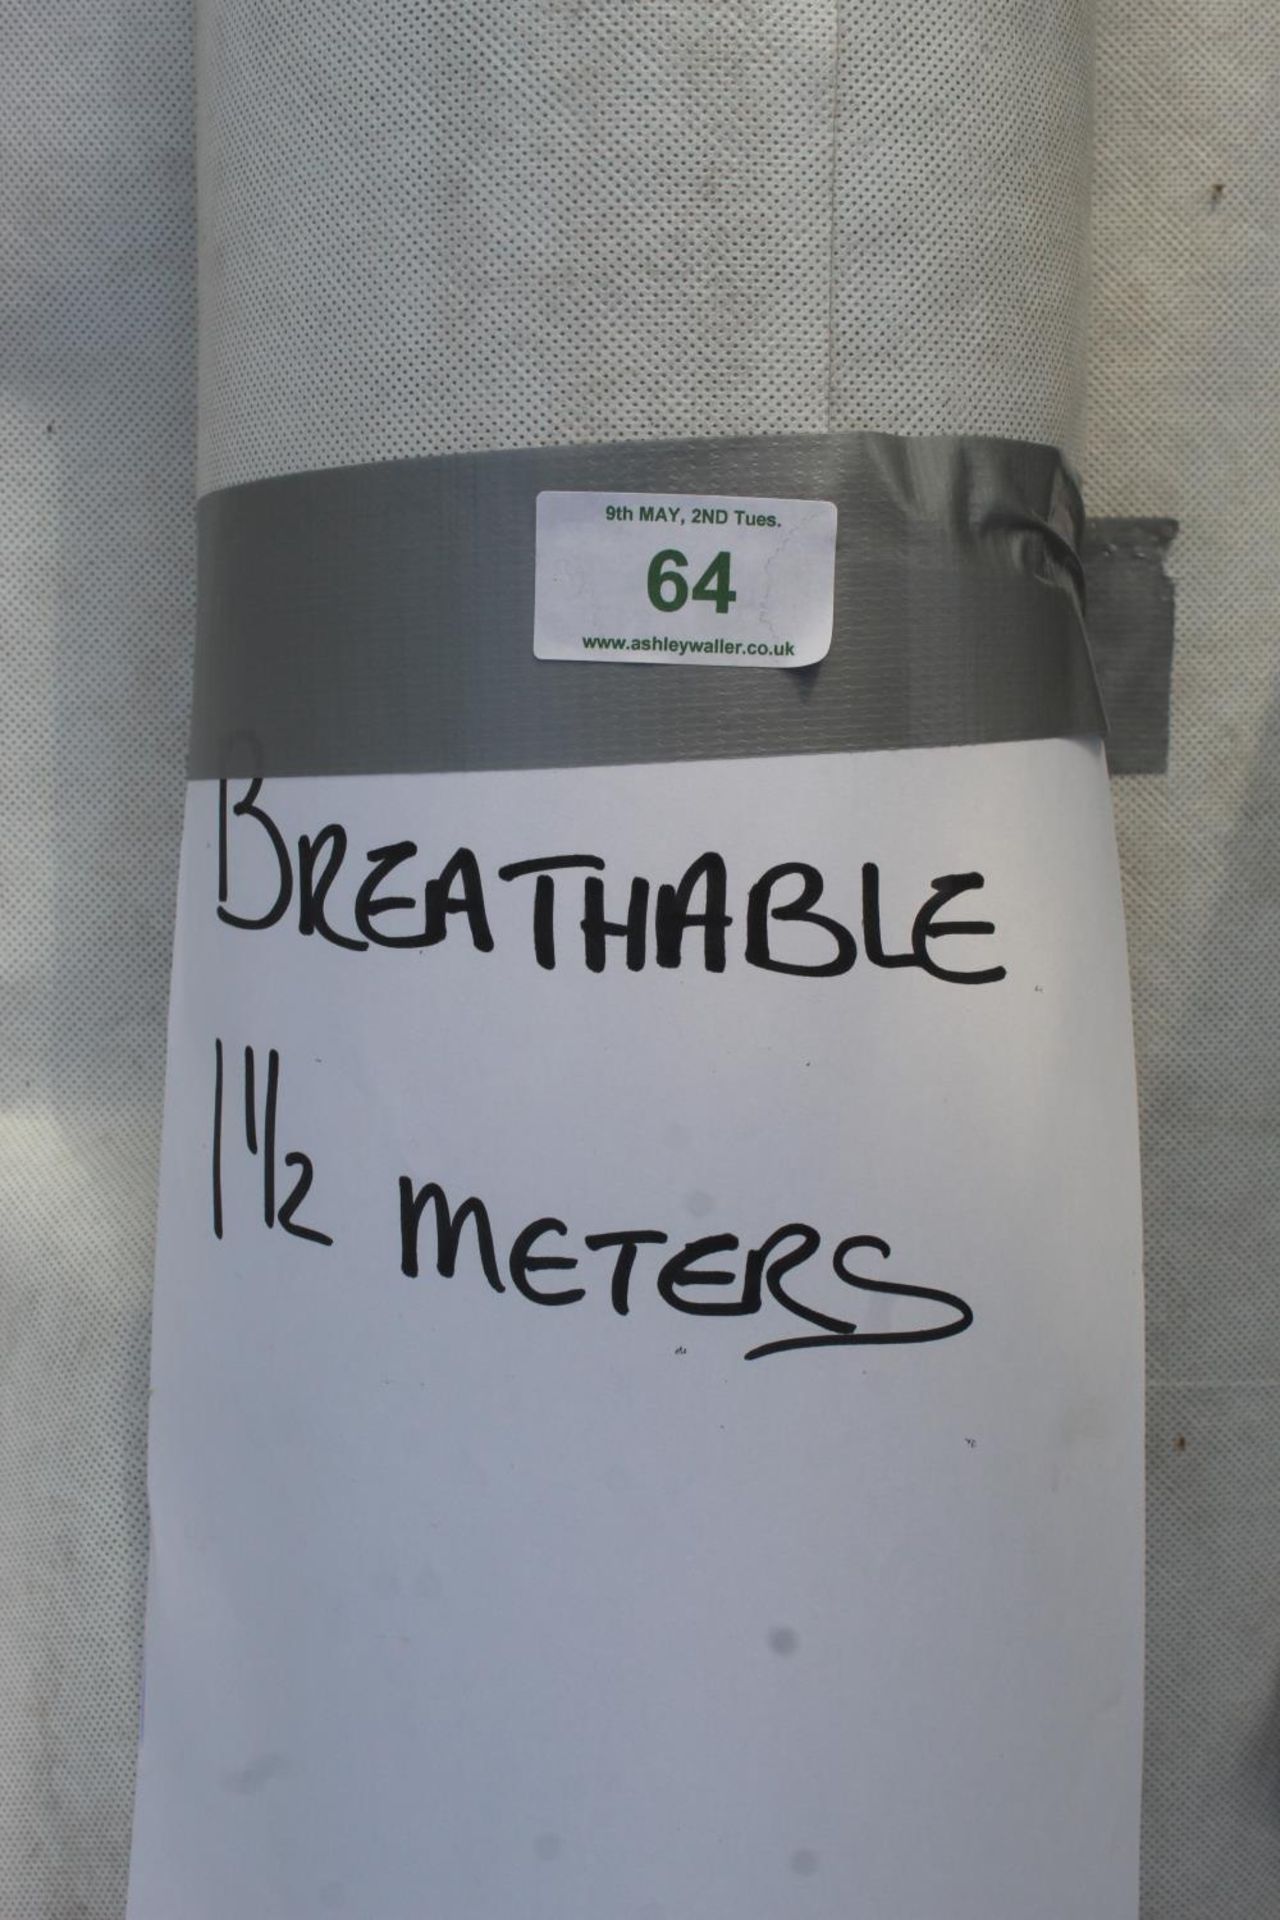 3 ROLLS OF BREATHABLE FELT 1½ MTRS NO VAT - Image 2 of 2